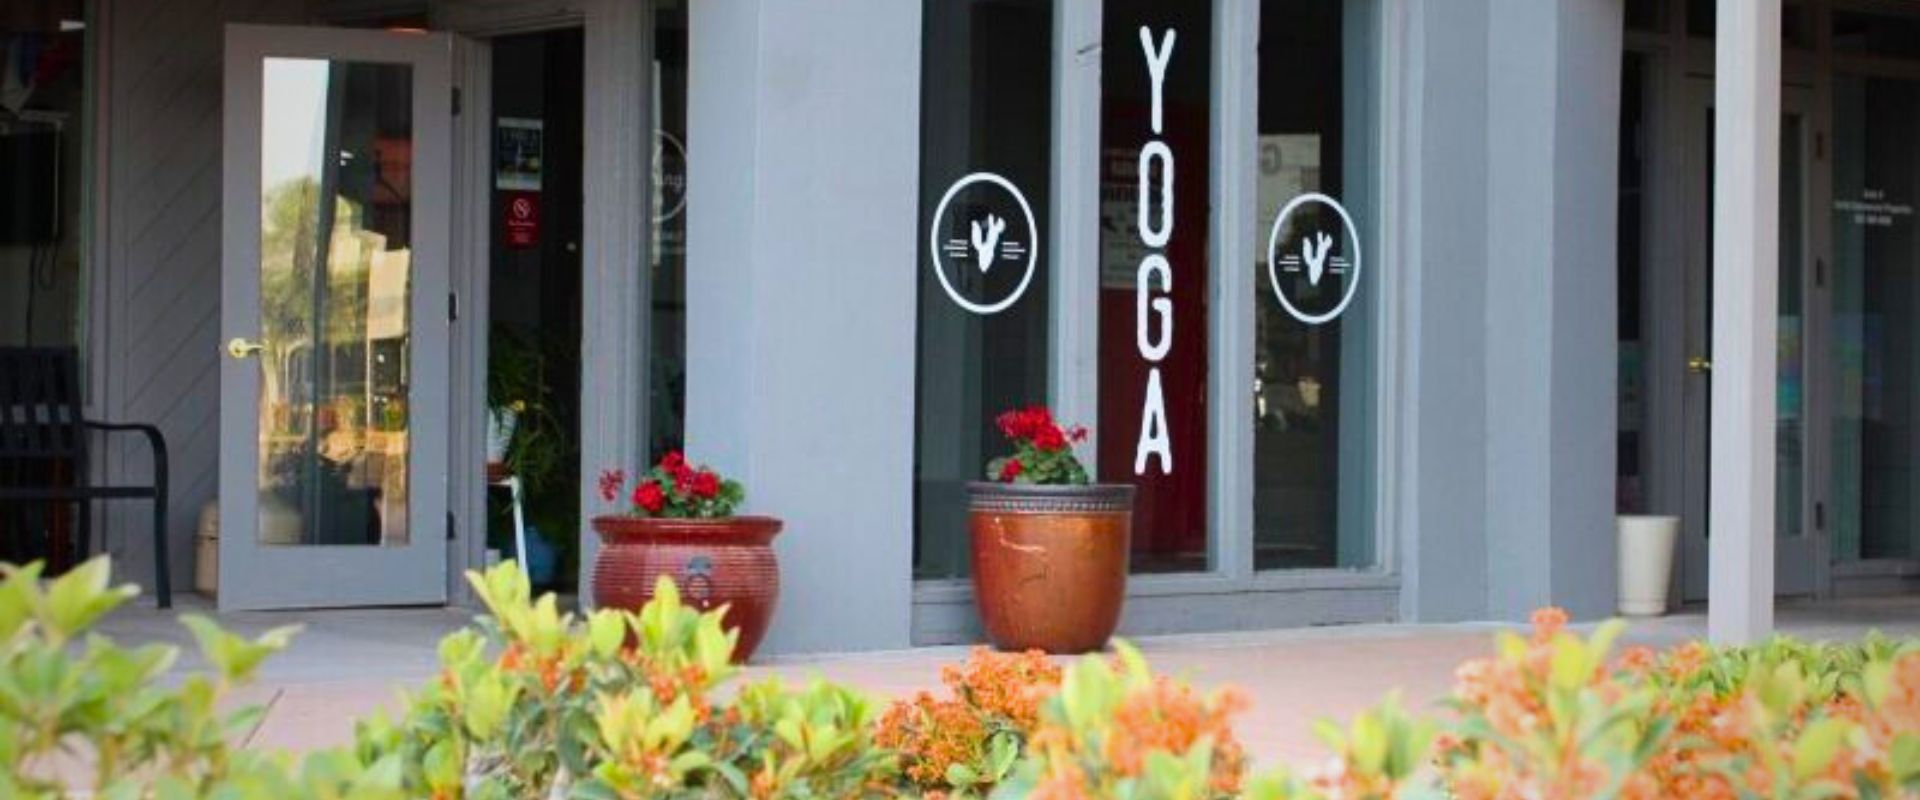 rOming Yoga Studio in Odessa, TX